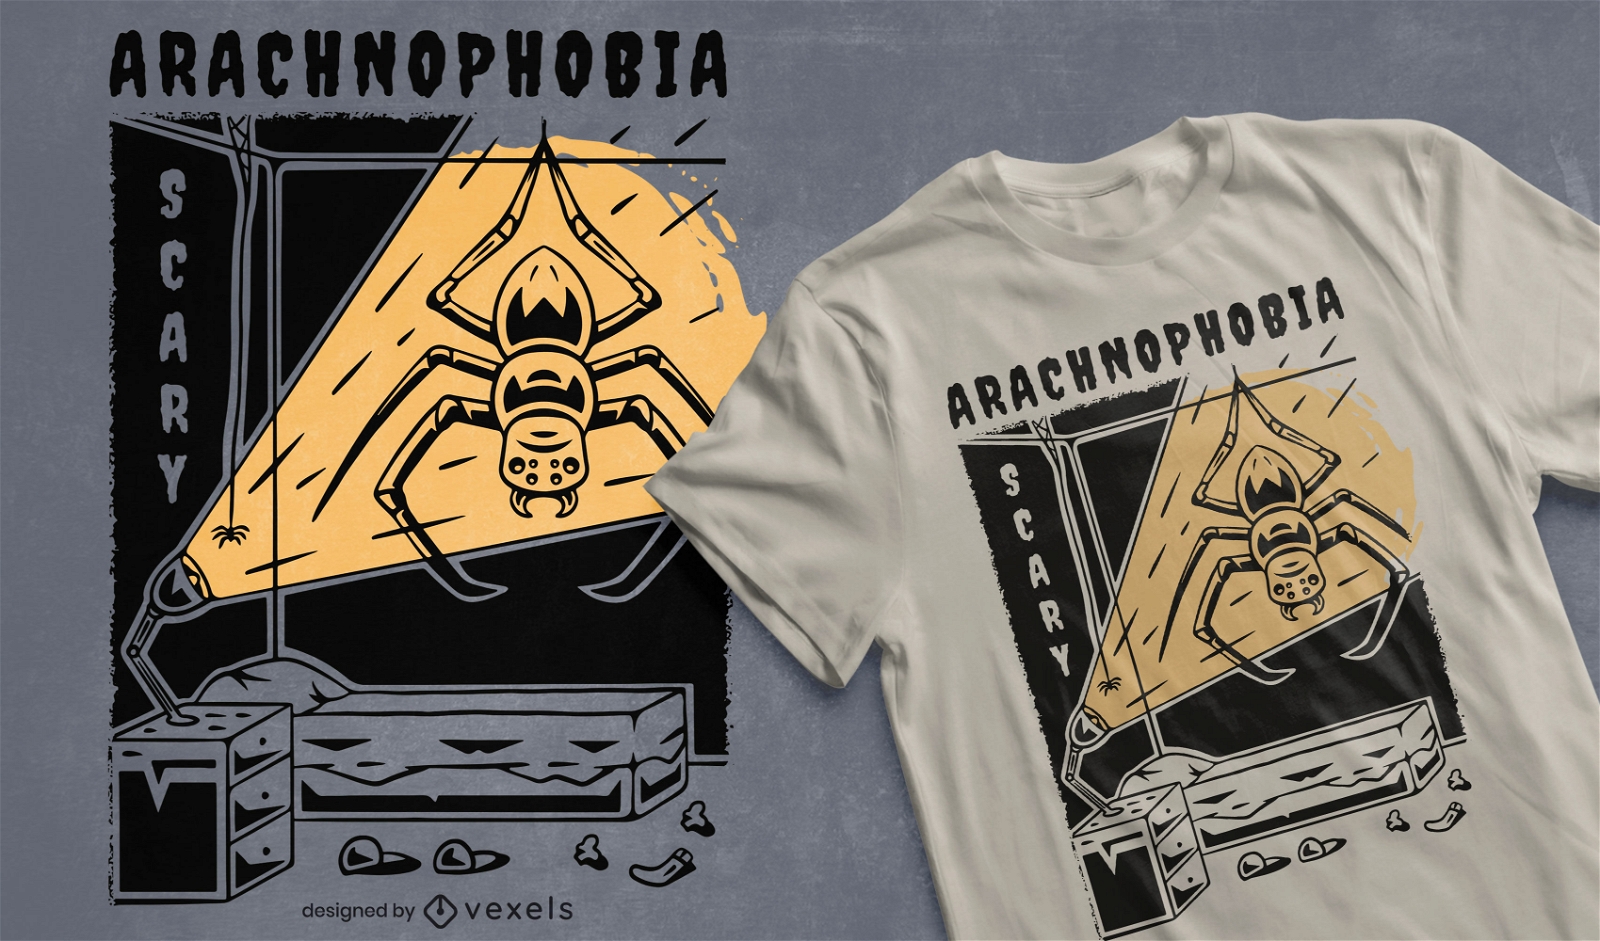 Gruseliges Arachnophobie-T-Shirt-Design